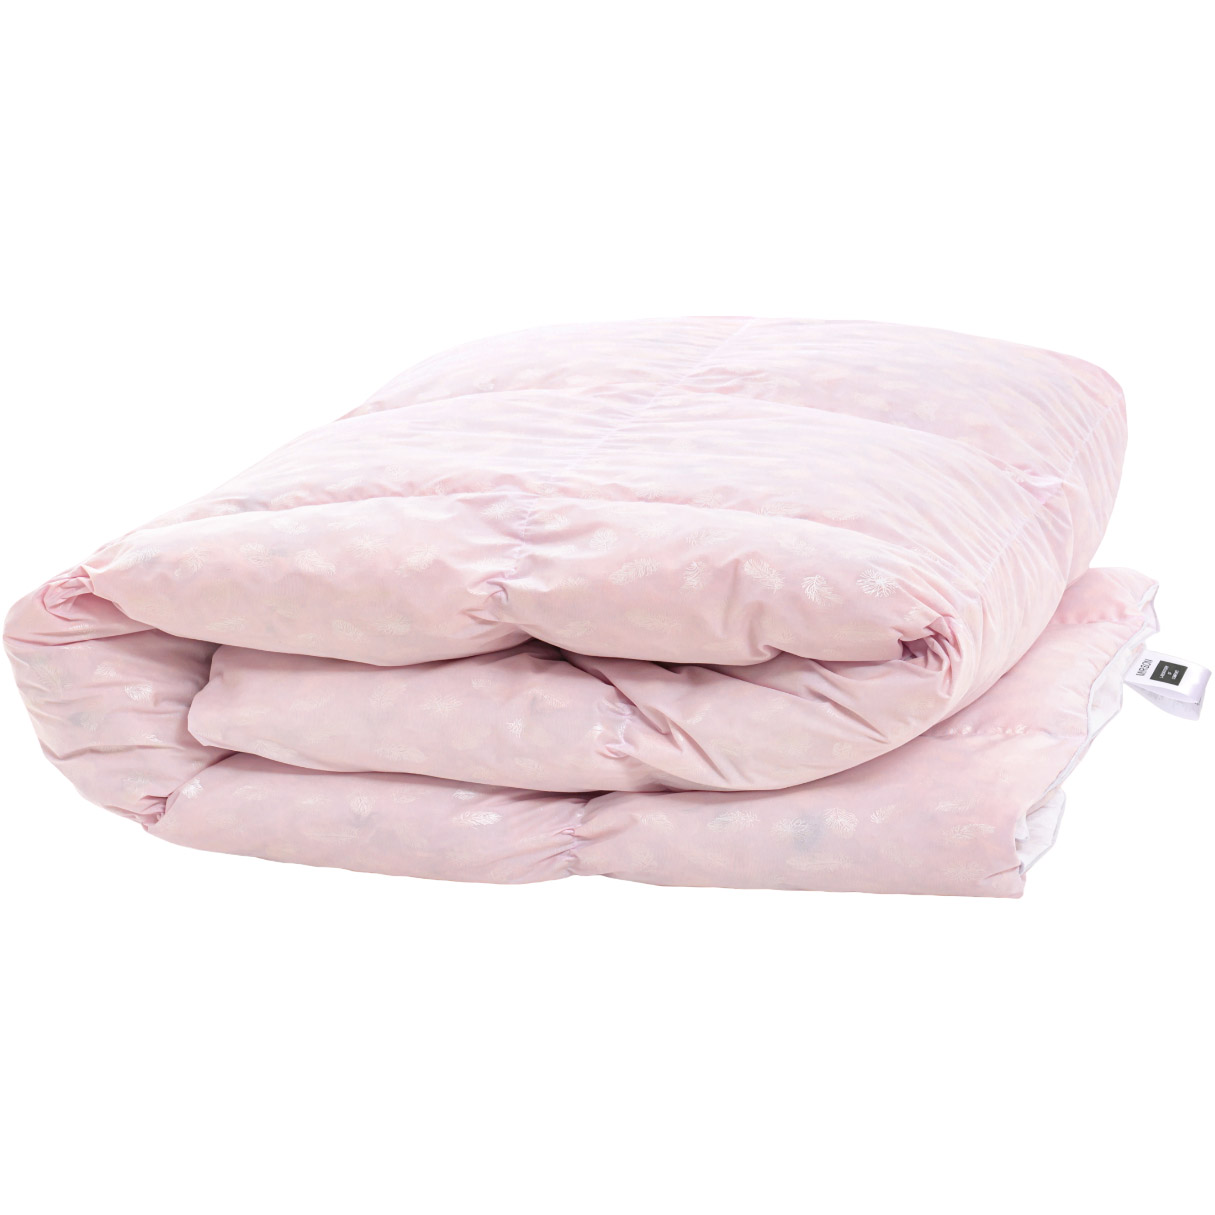 Одеяло пуховое MirSon Karmen №1850 Bio-Pink, 70% пух, 110x140 см, розовое (2200003013962) - фото 1